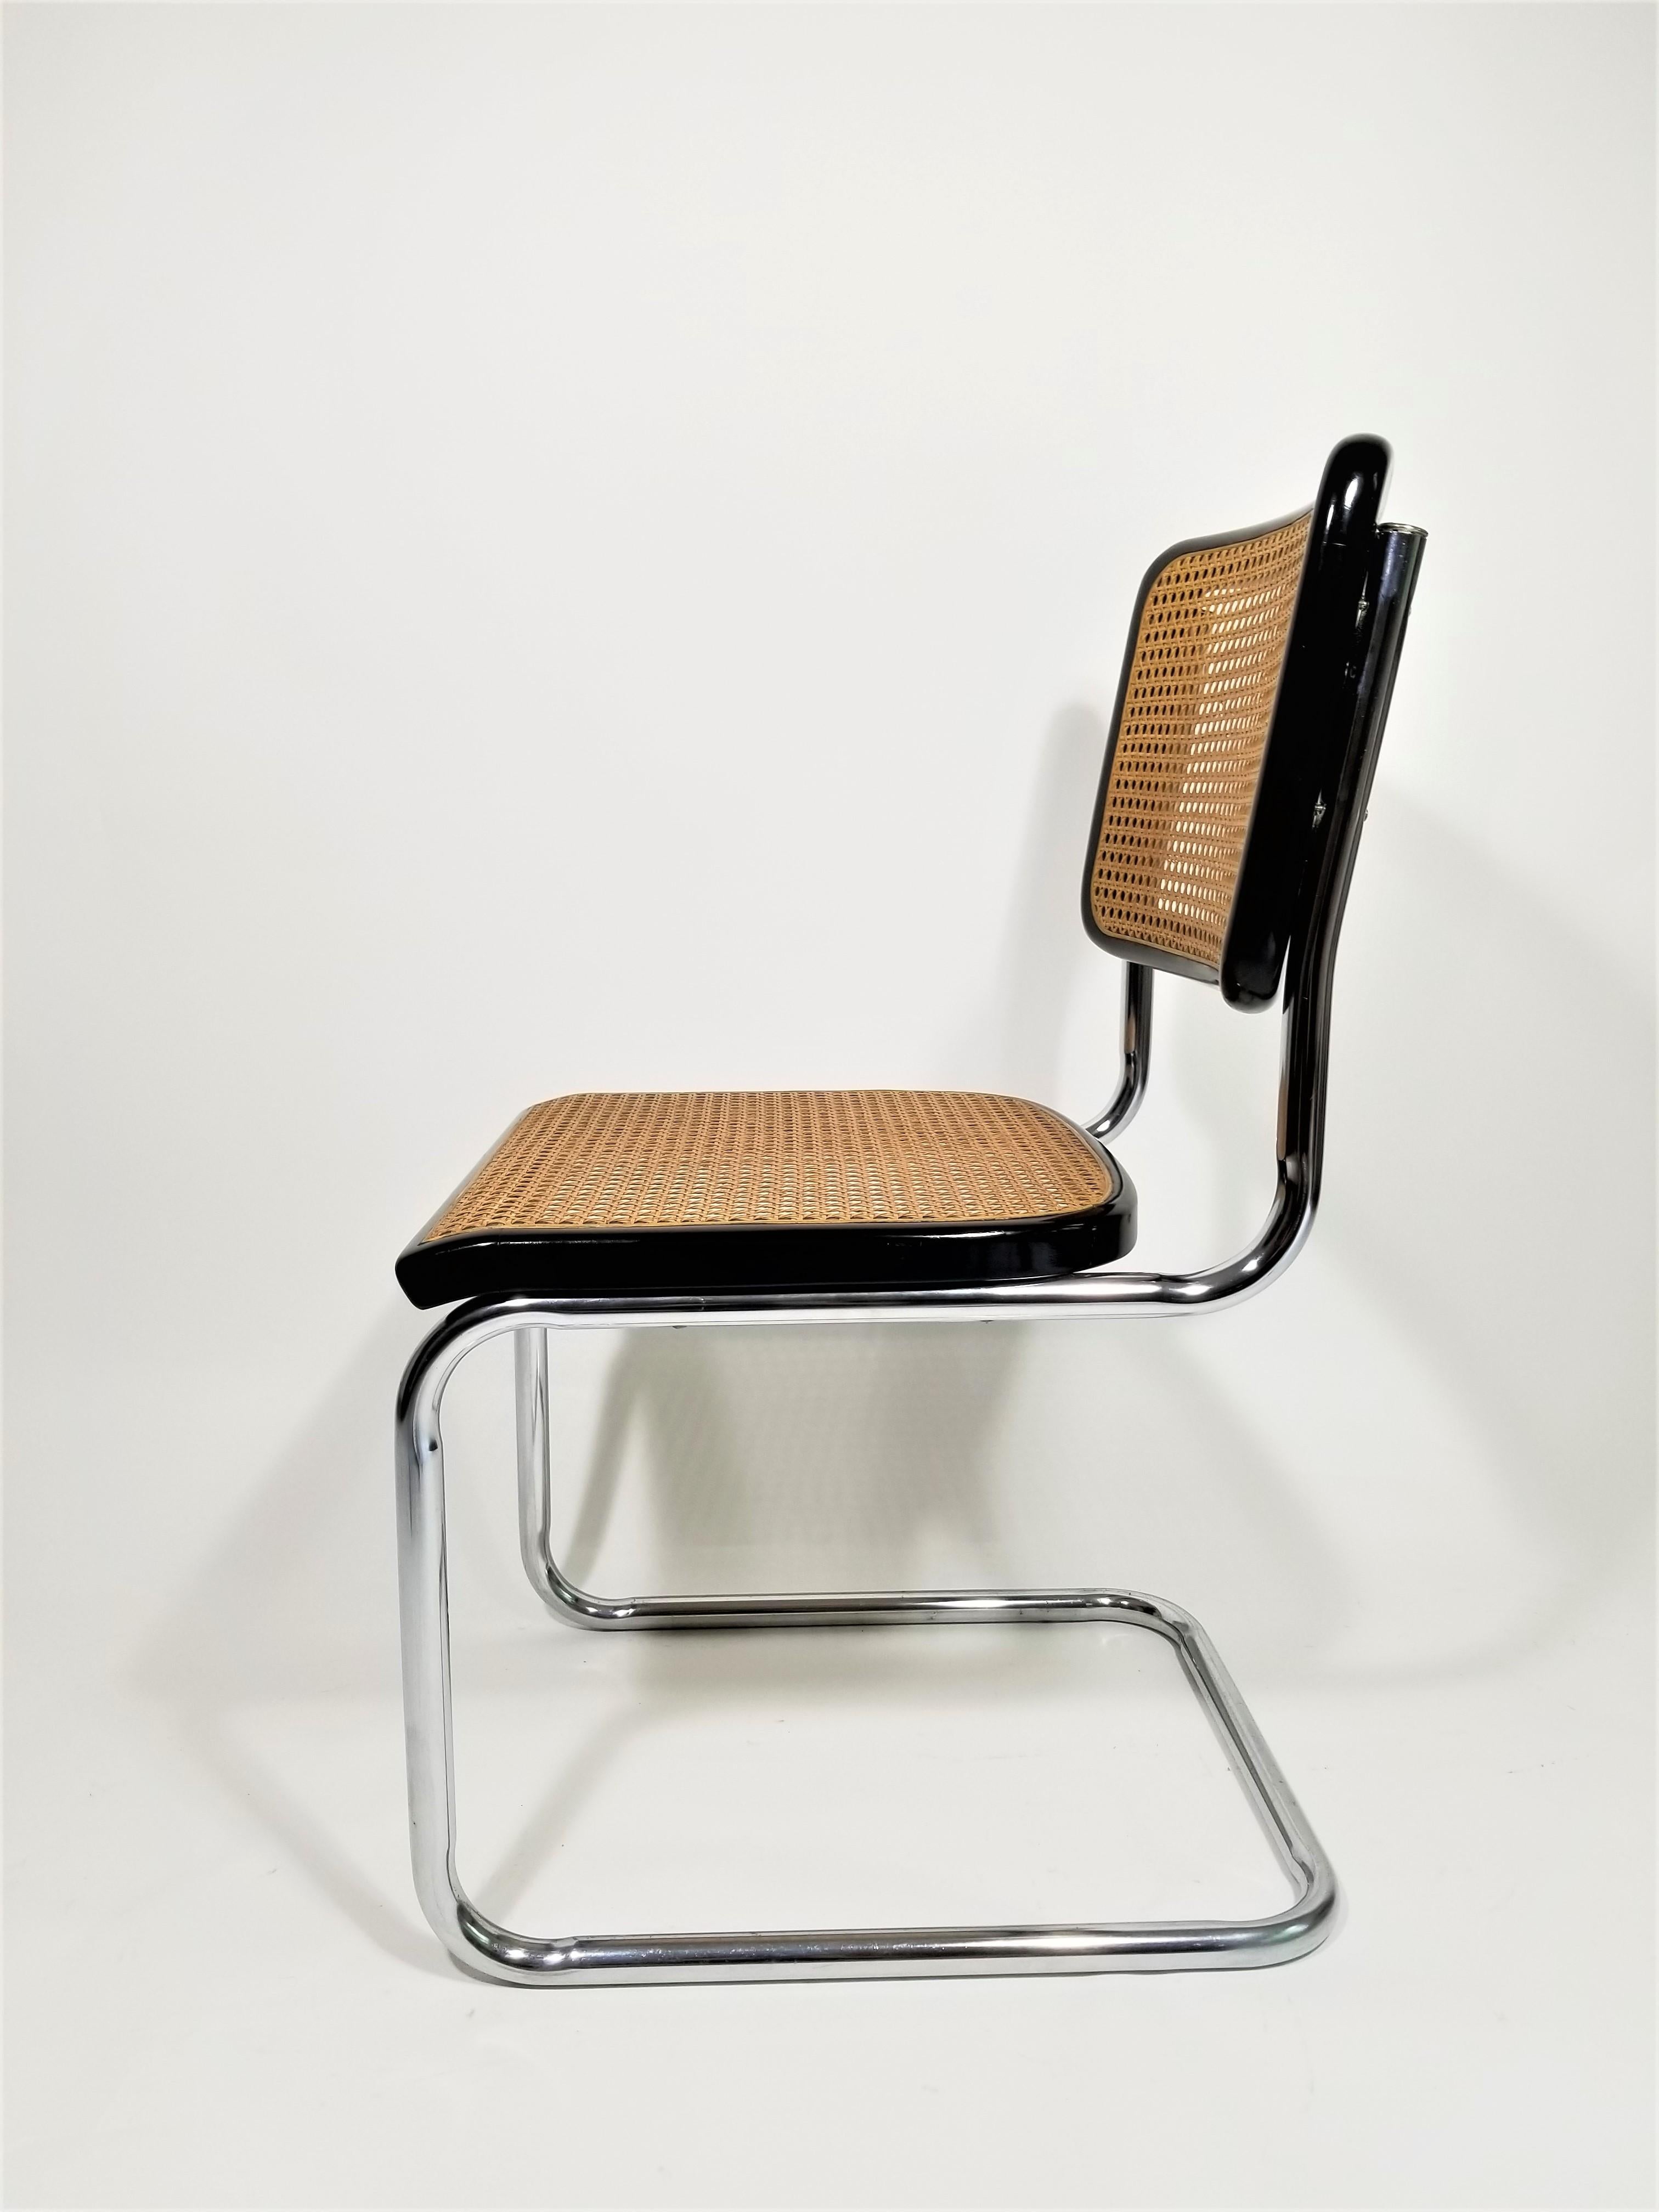 Cane Thonet Marcel Breuer Cesca Black Side Chair Midcentury, New York